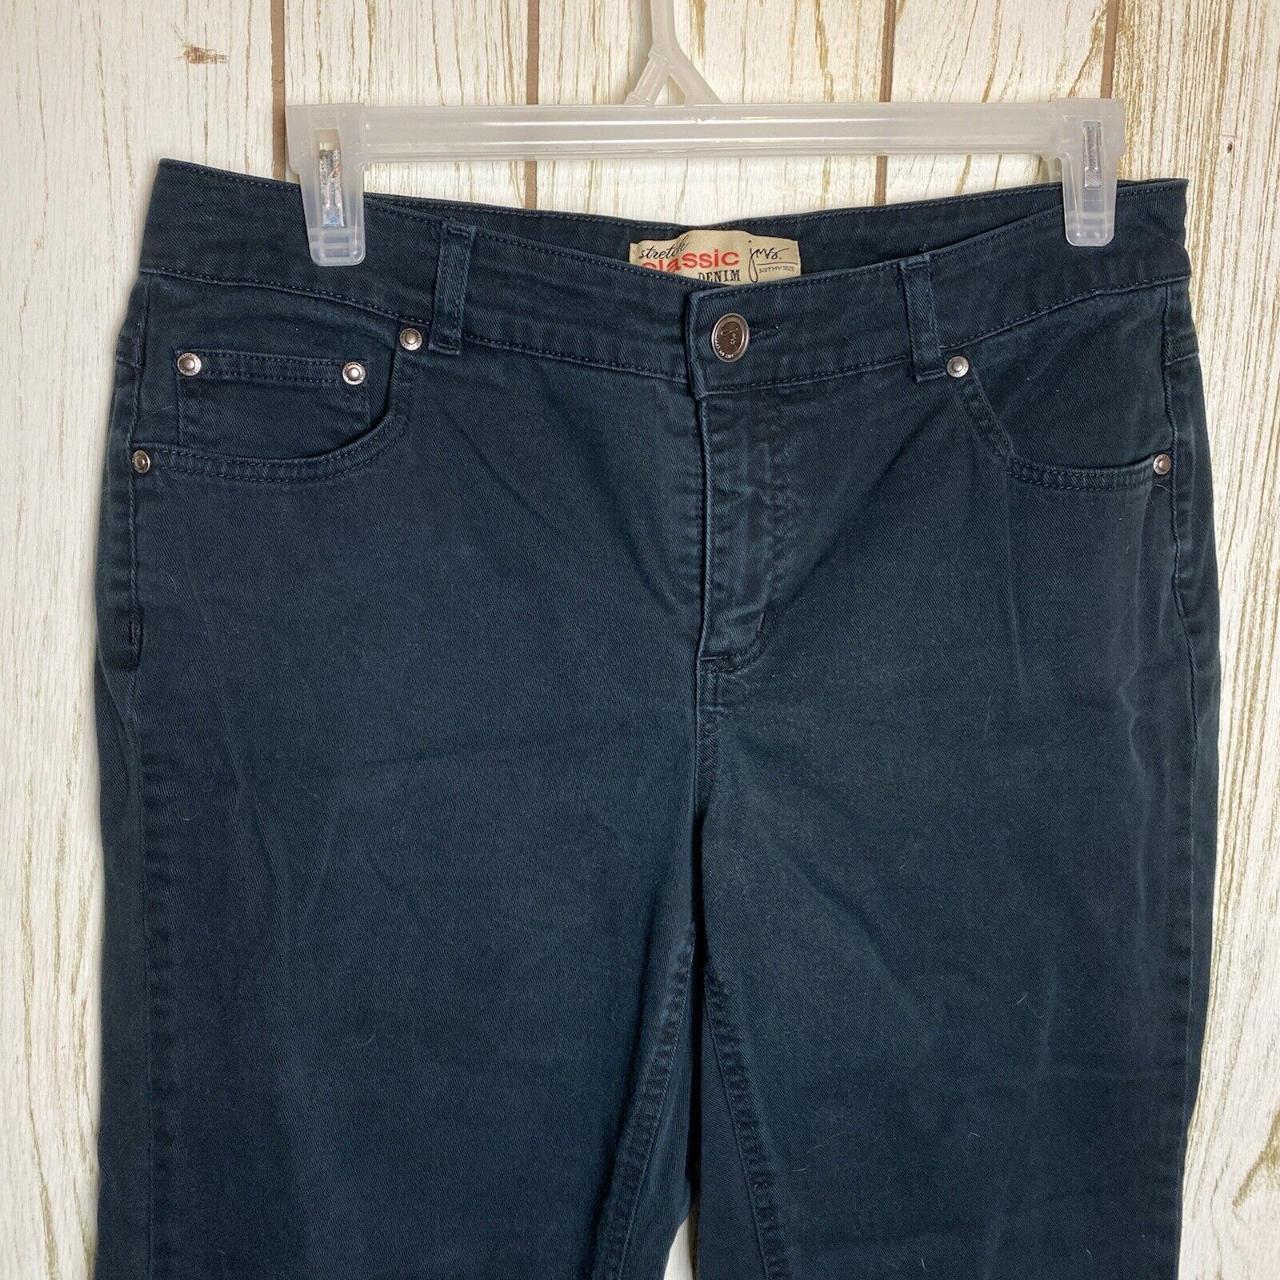 JMS Just My Size Women Jeans 16W 36x29 Classic... - Depop